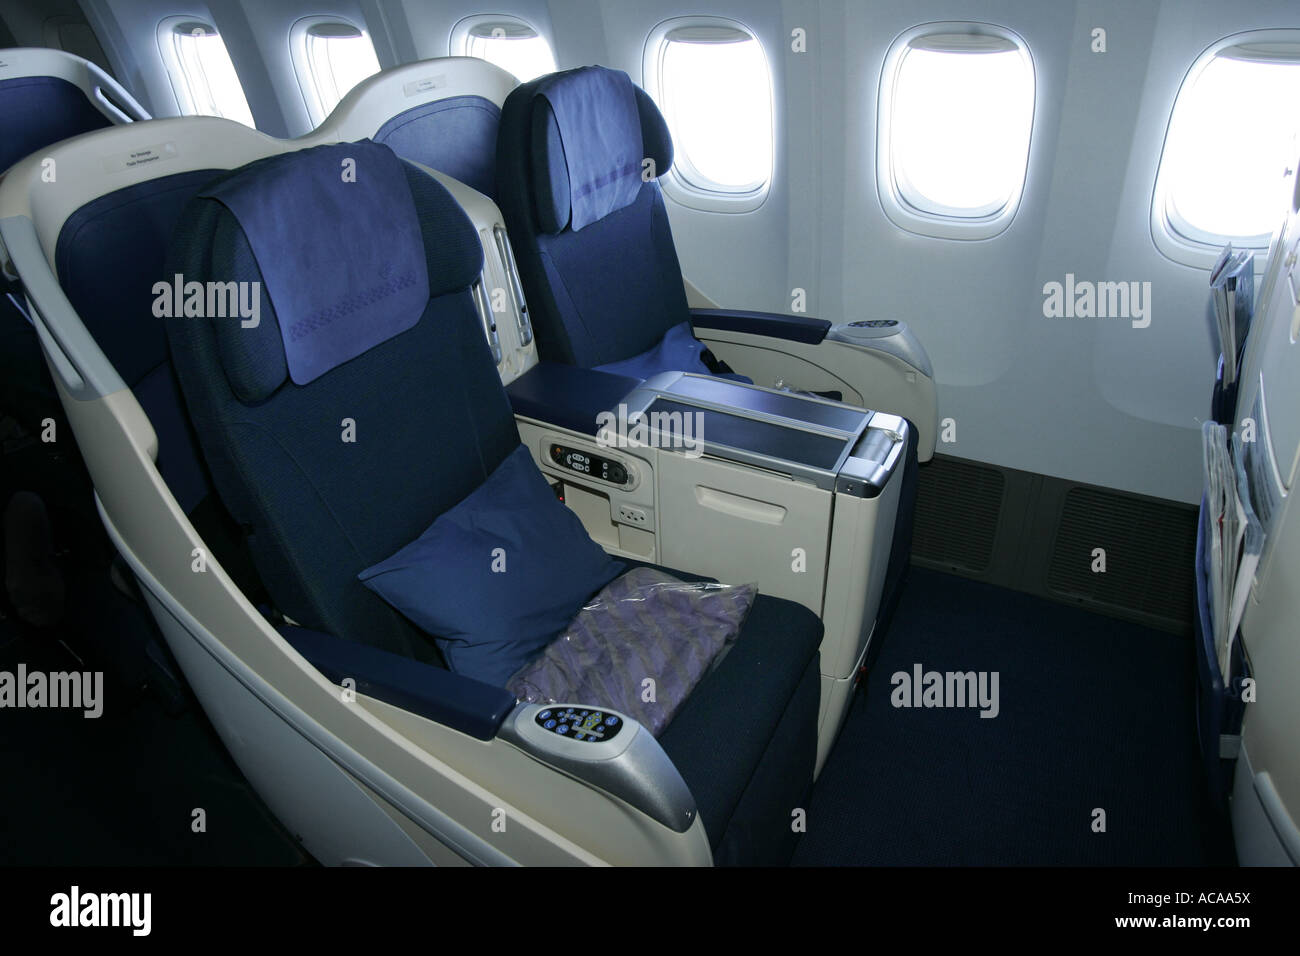 Boeing Interior Seats Stockfotos Boeing Interior Seats